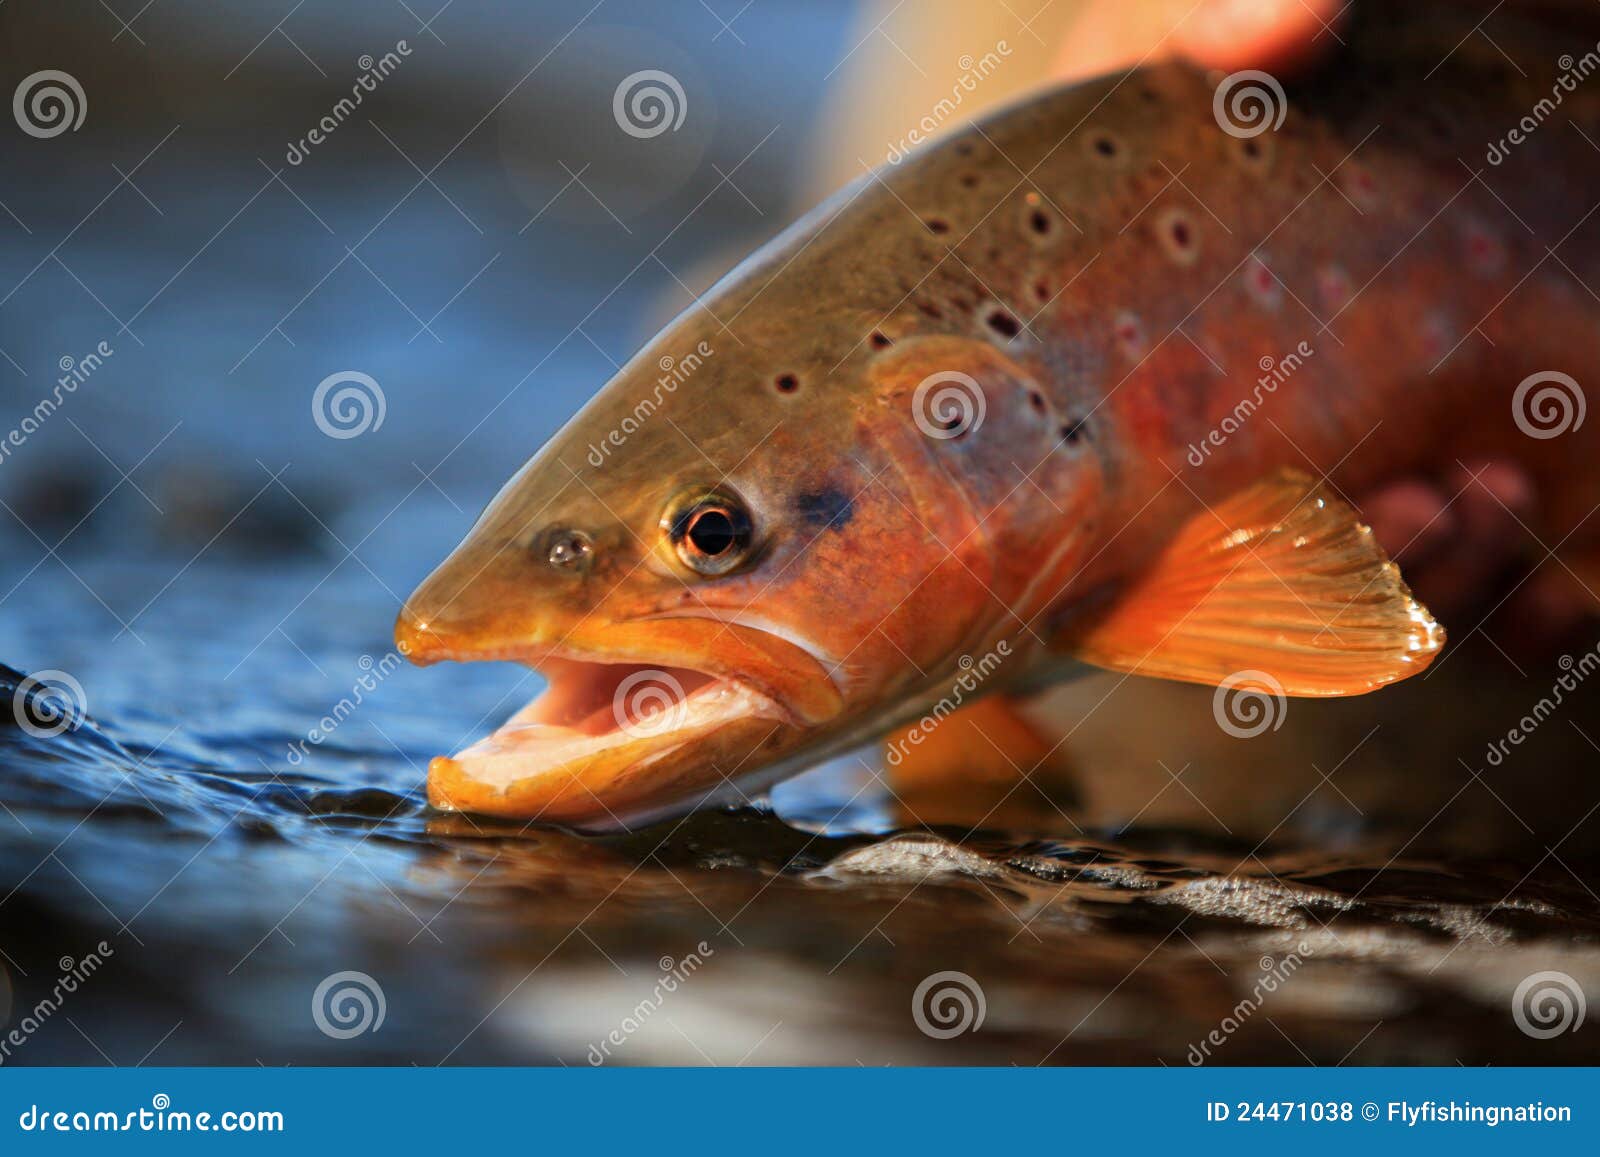 wild brown trout portrait